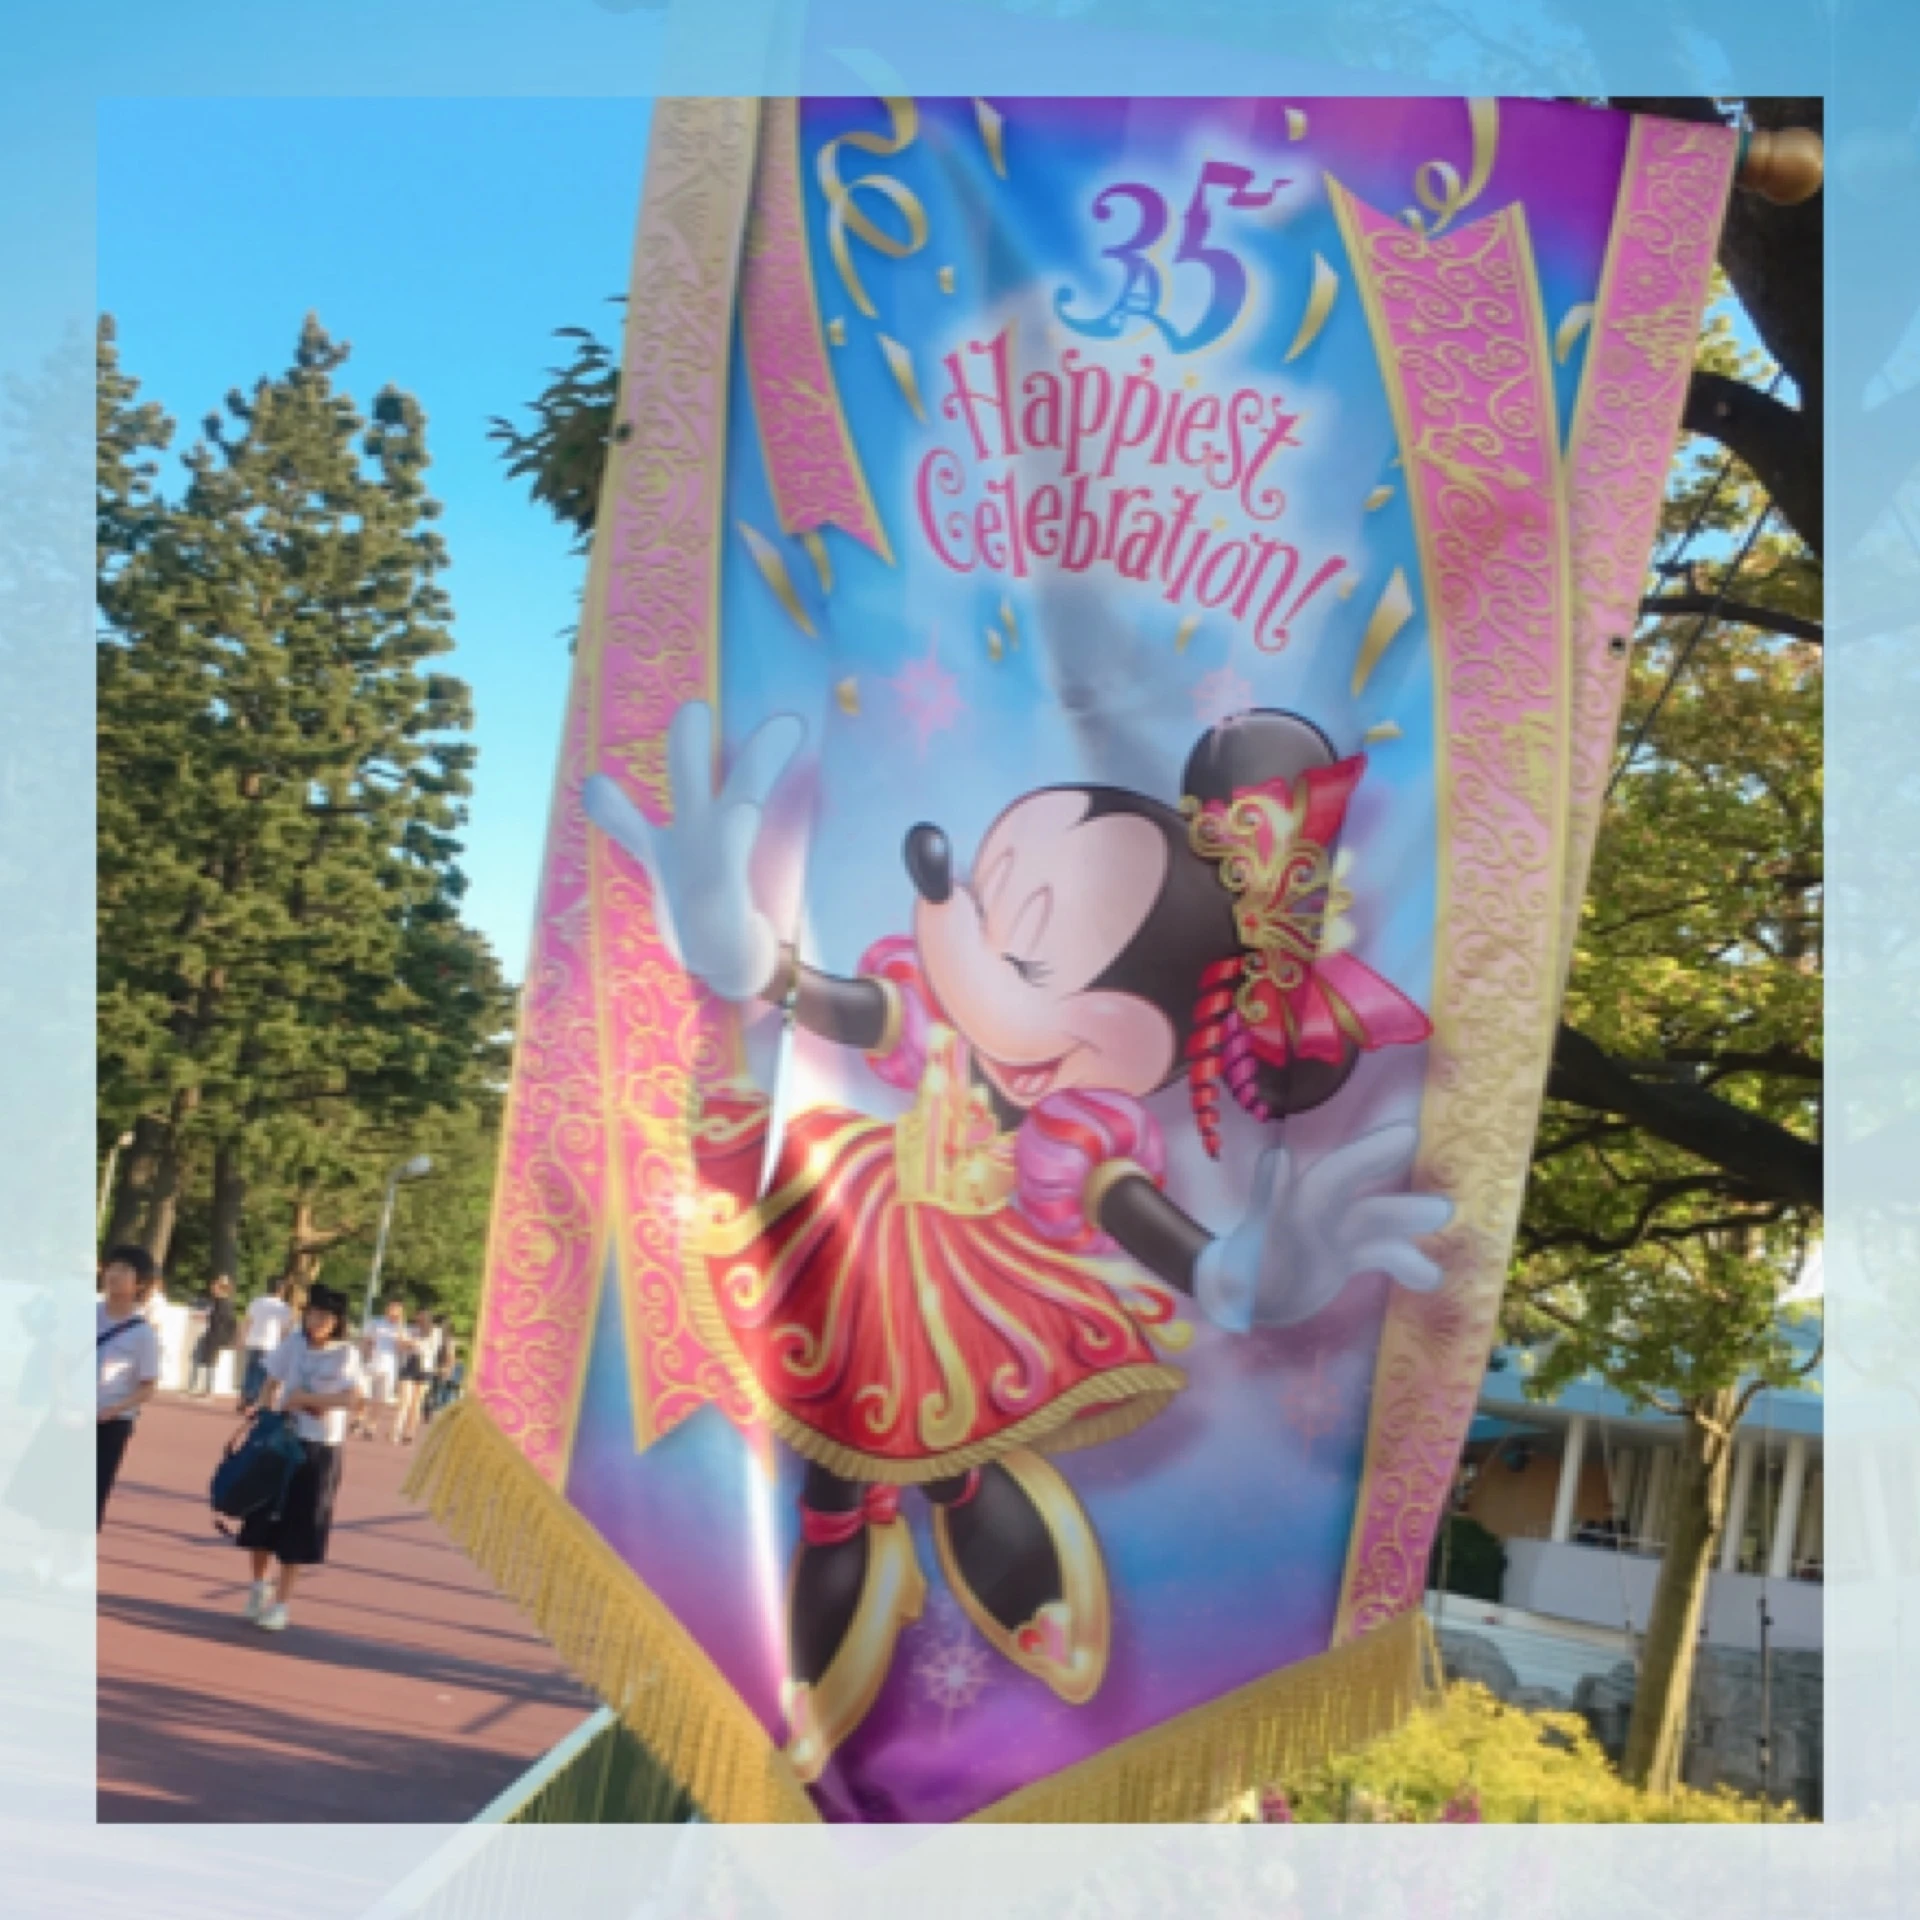 Tokyo Disneyland《 35 Happiest Gelebration! 》に行ってきました♫_1_5-3